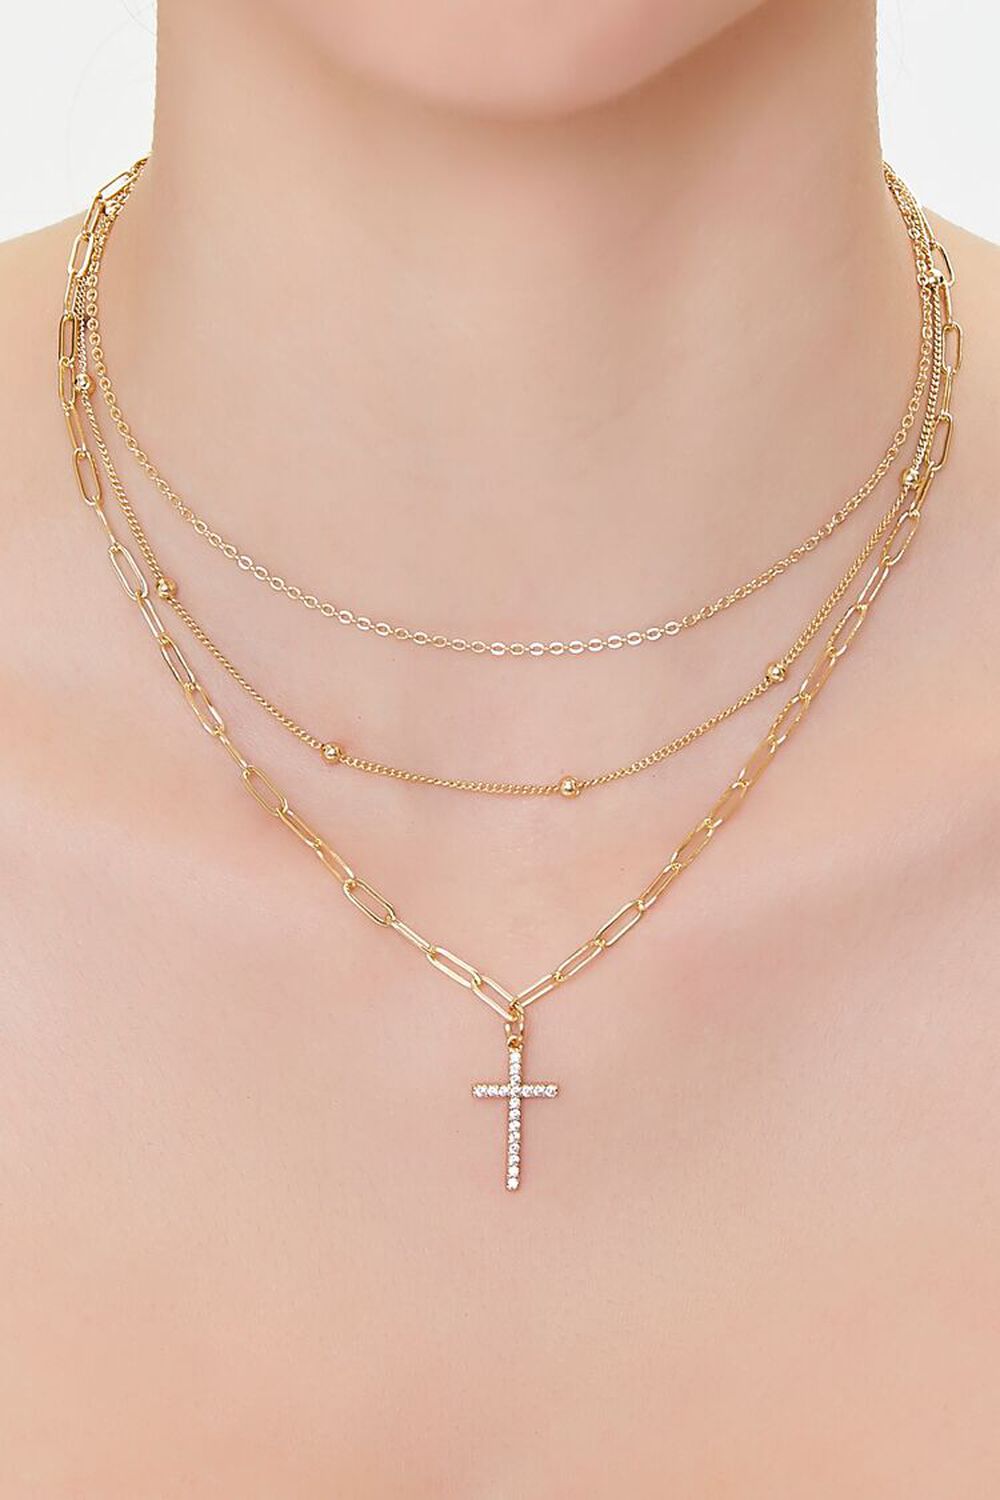 GOLD Rhinestone Cross Layered Necklace, image 1